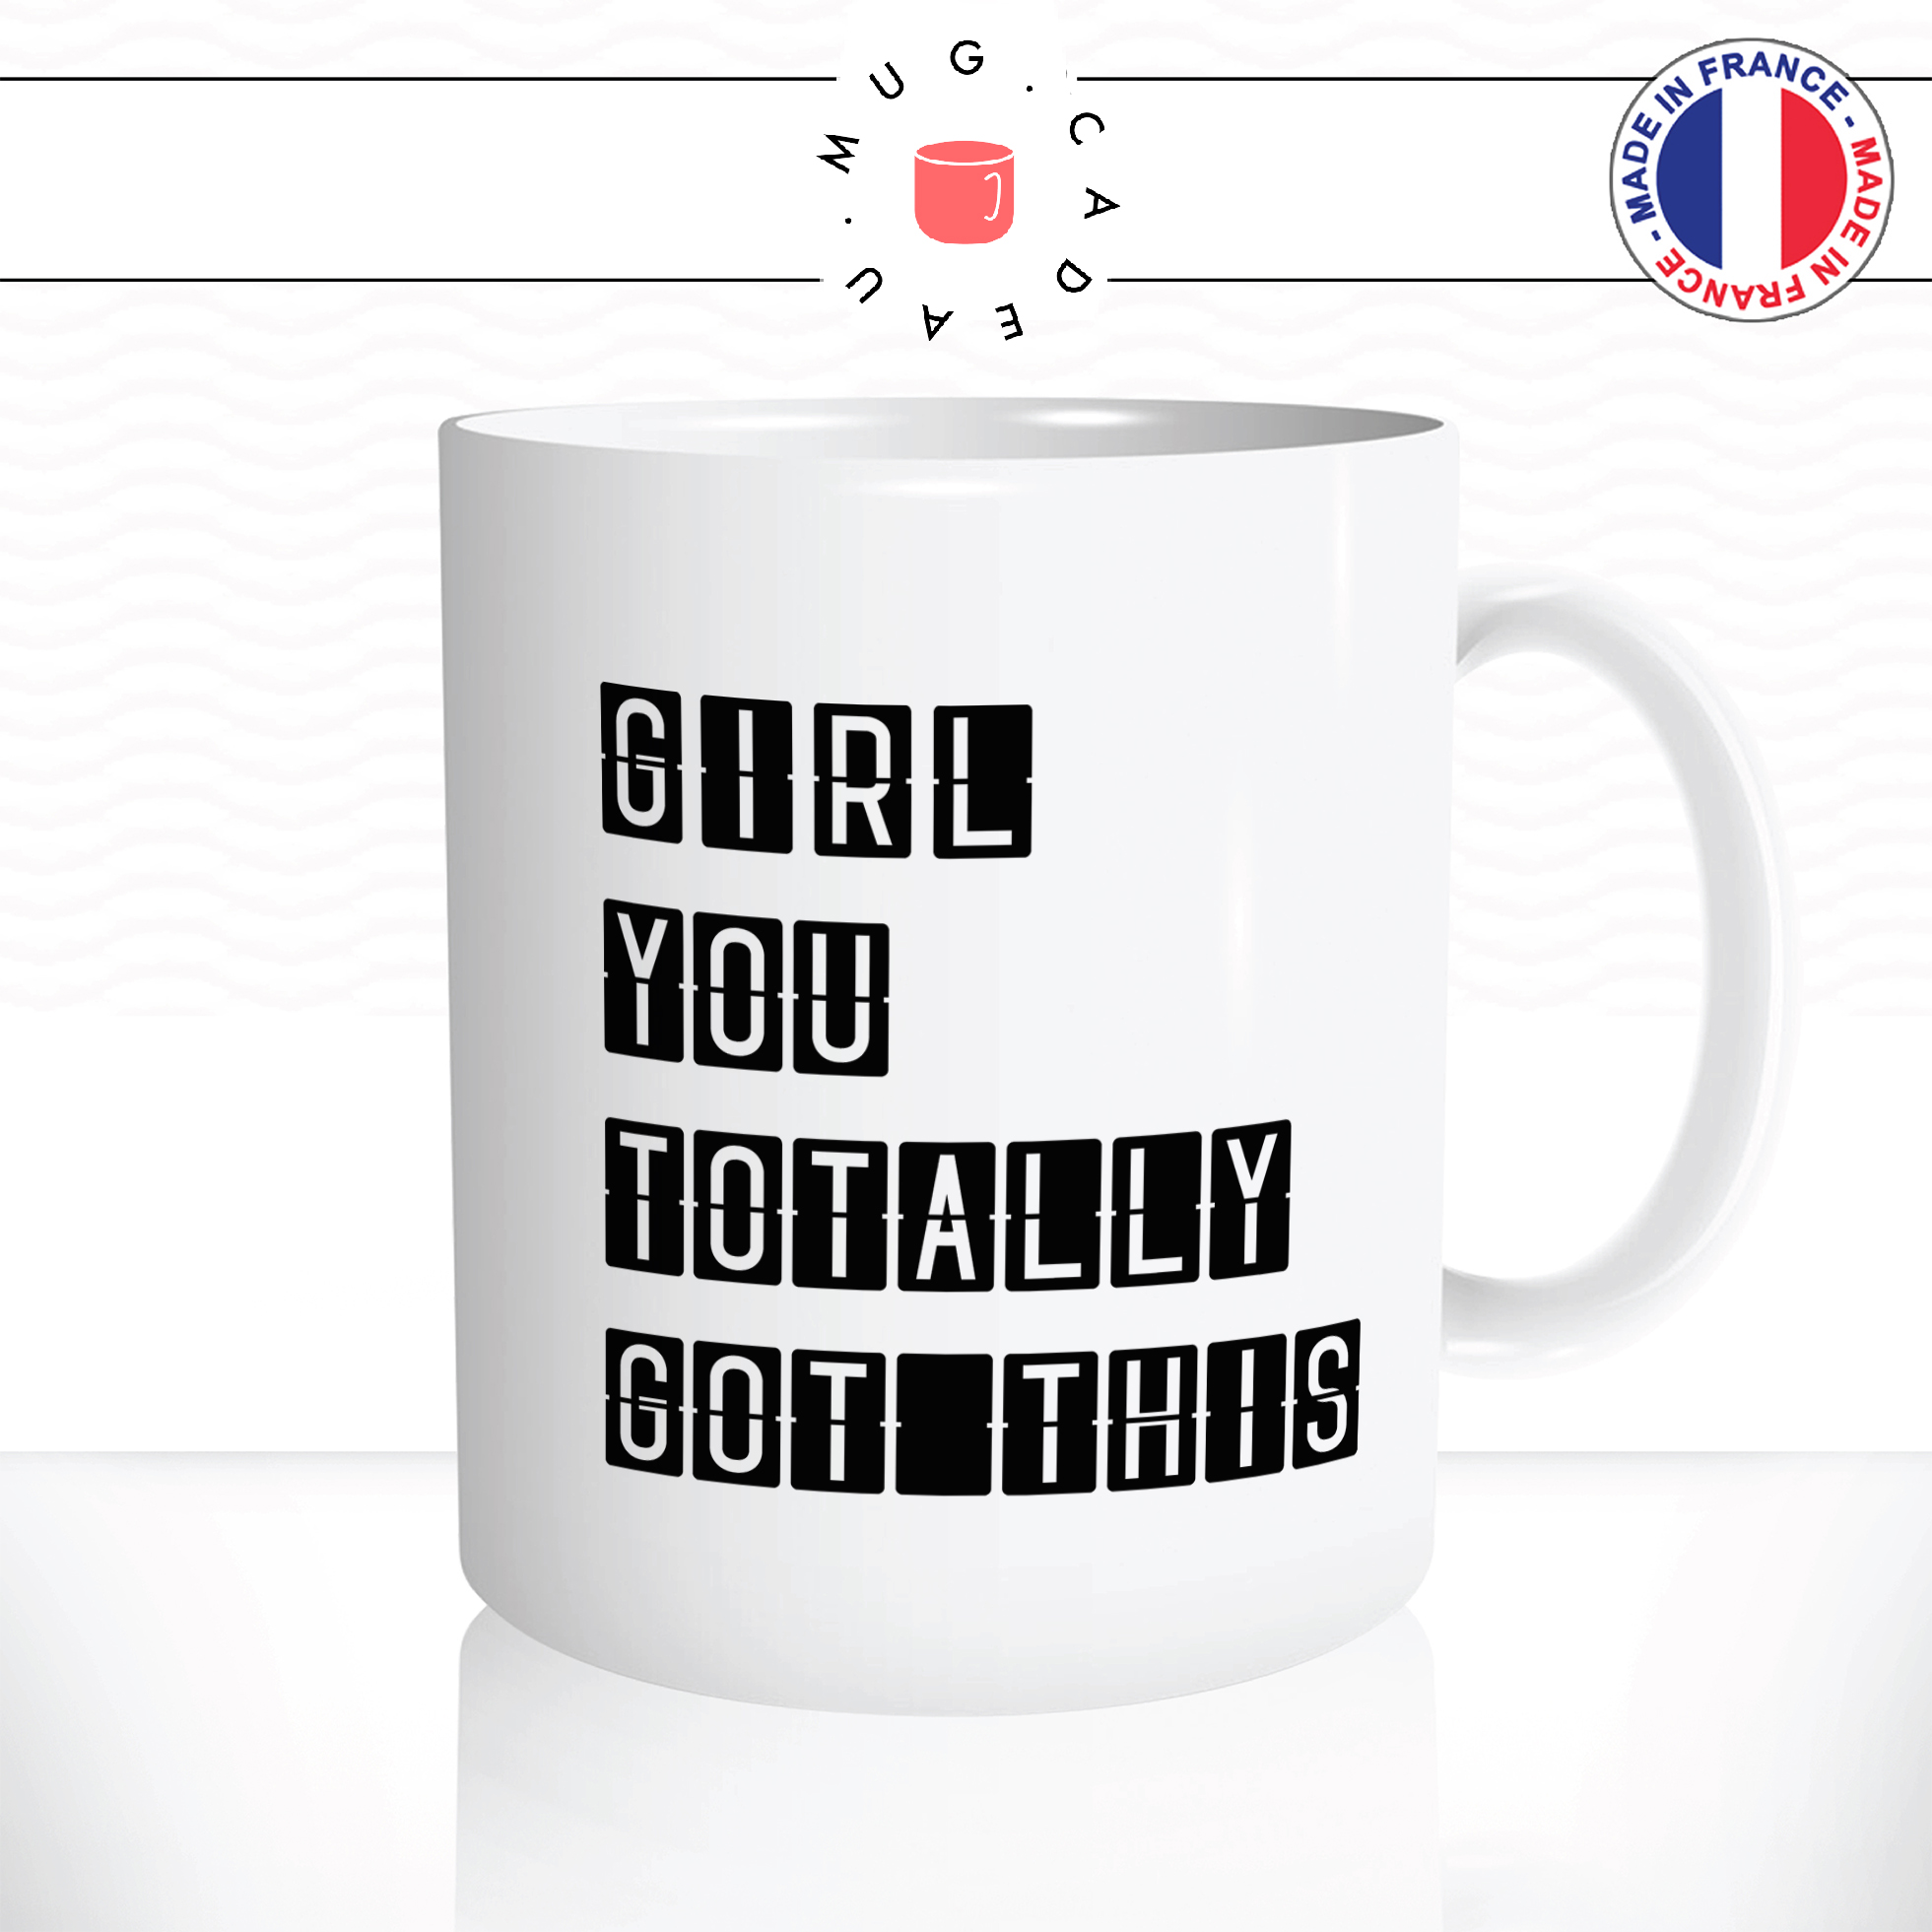 mug-tasse-ref43-citation-heureuse-girl-you-totally-got-this-cafe-the-mugs-tasses-personnalise-anse-droite